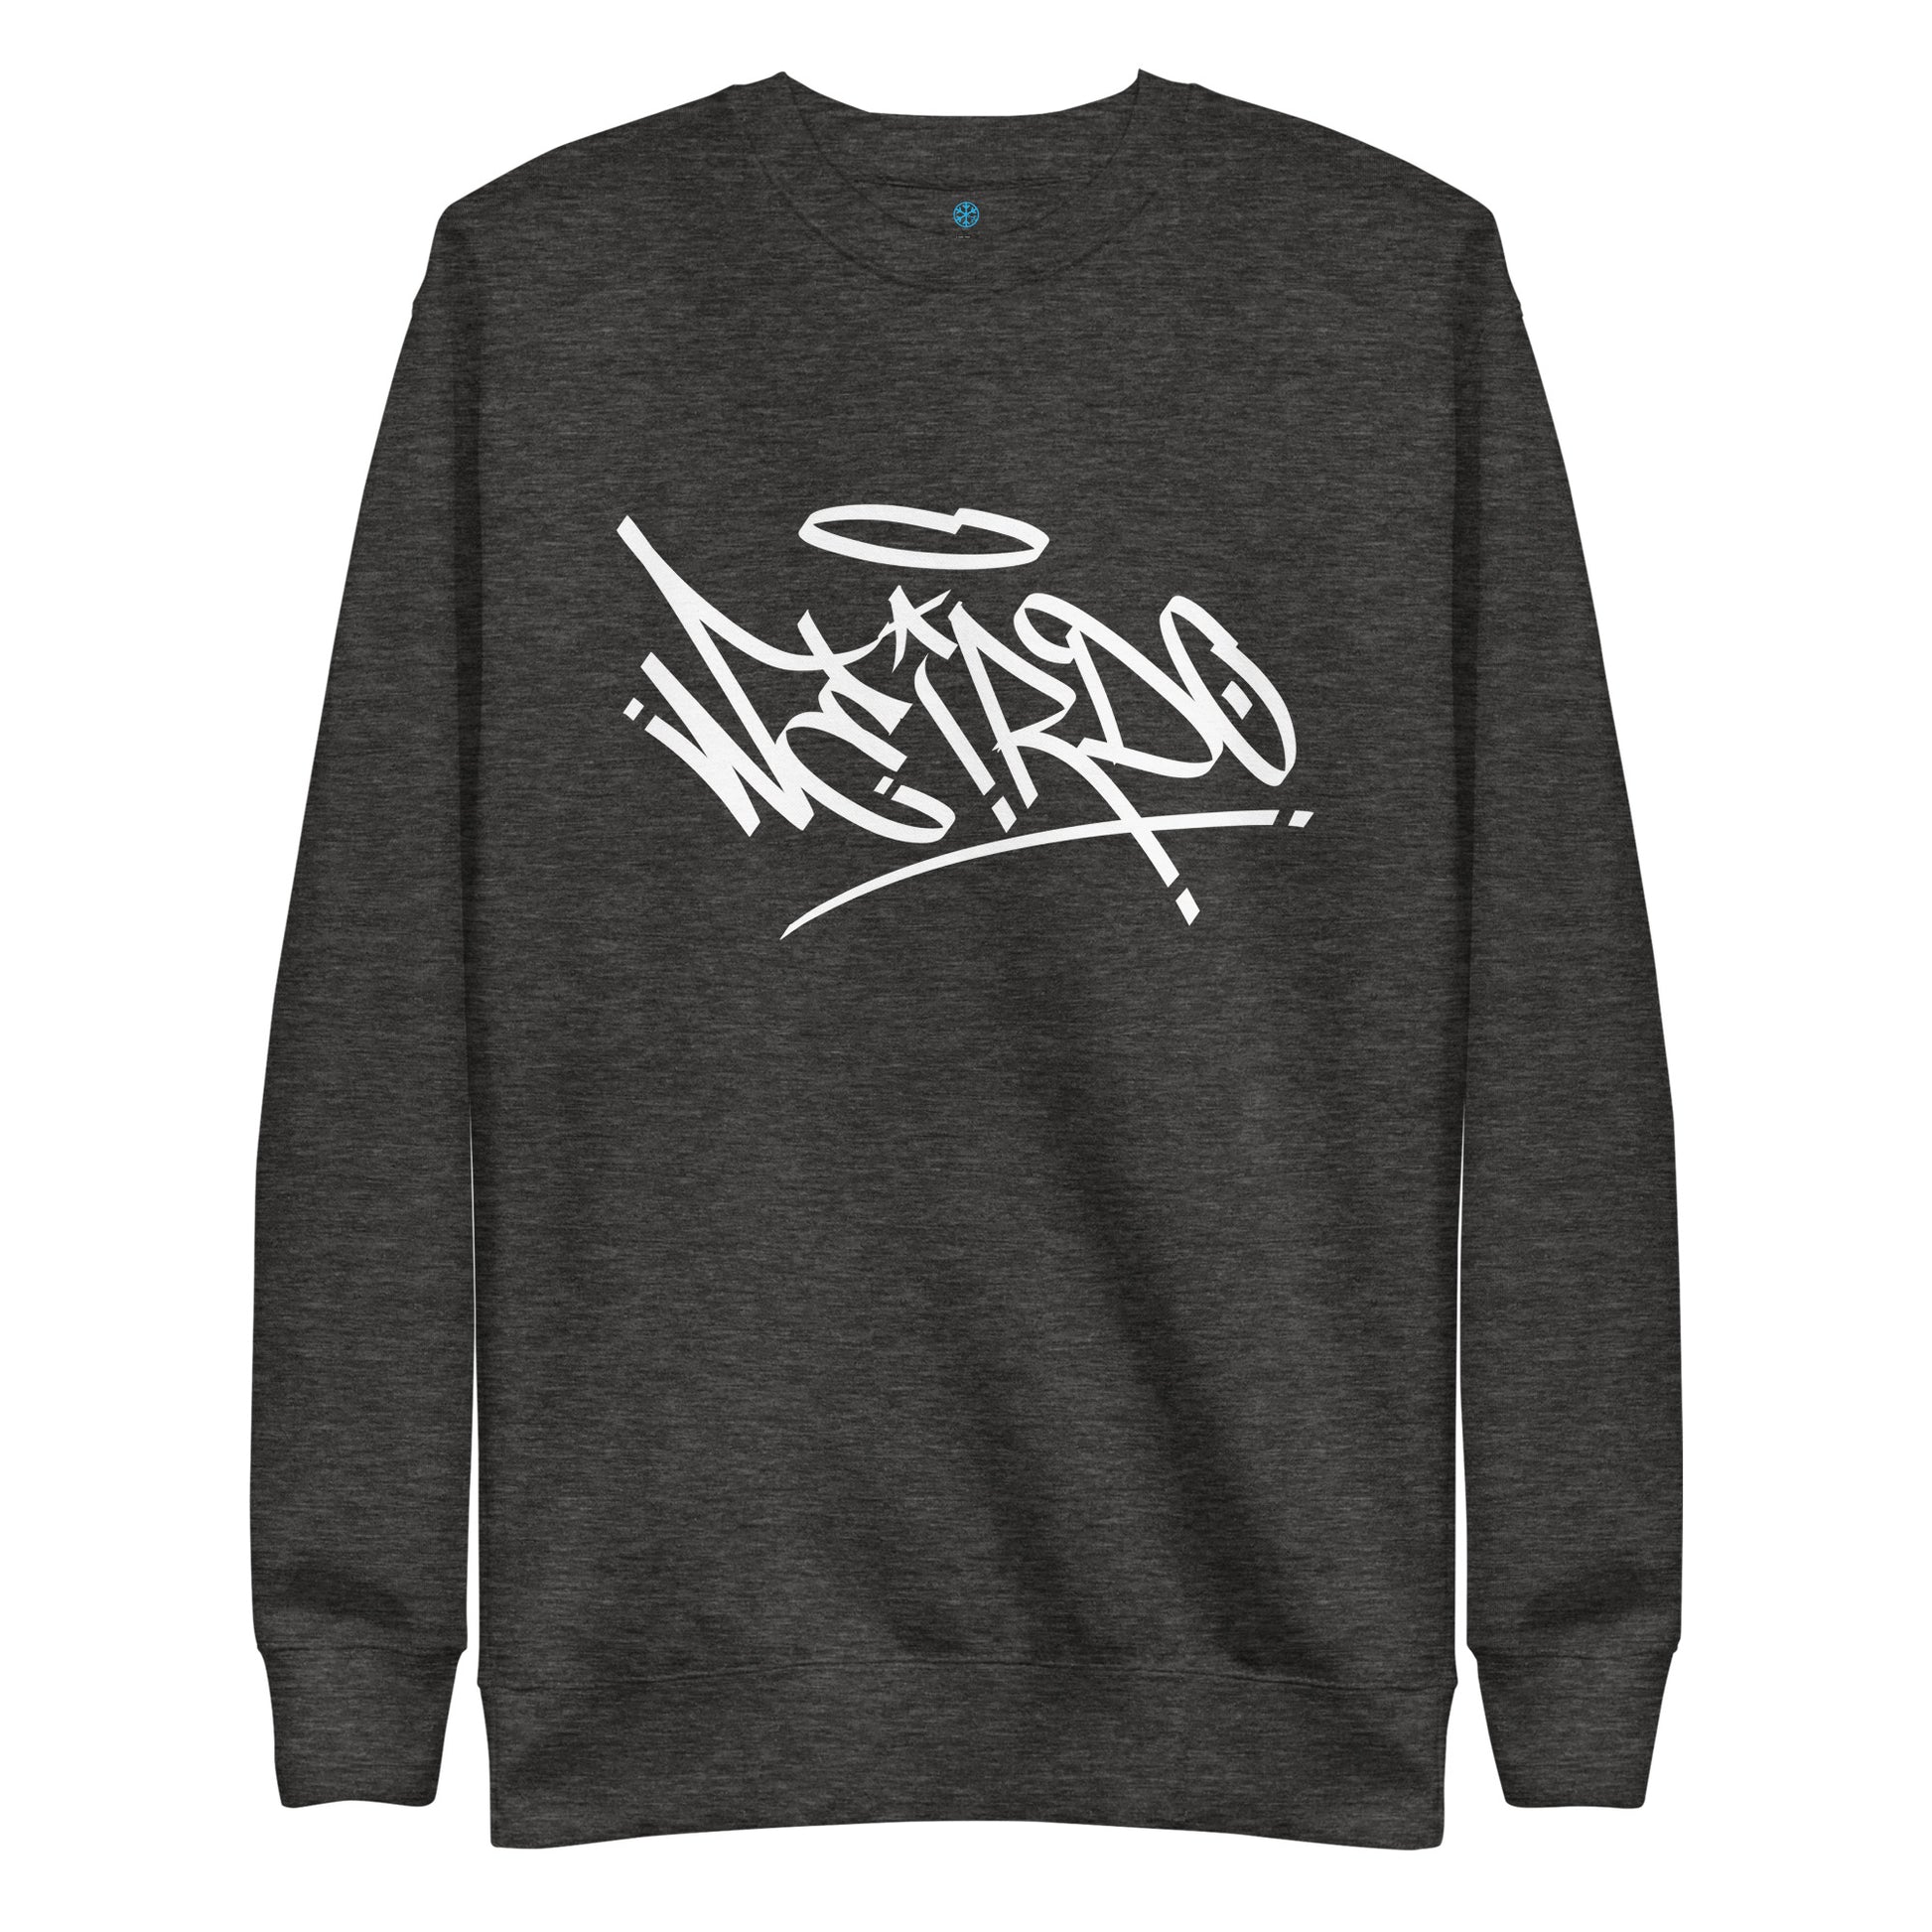 Weirdo Tag Sweatshirt Dark Gray by B.Different Clothing street art graffiti inspired streetwear brand